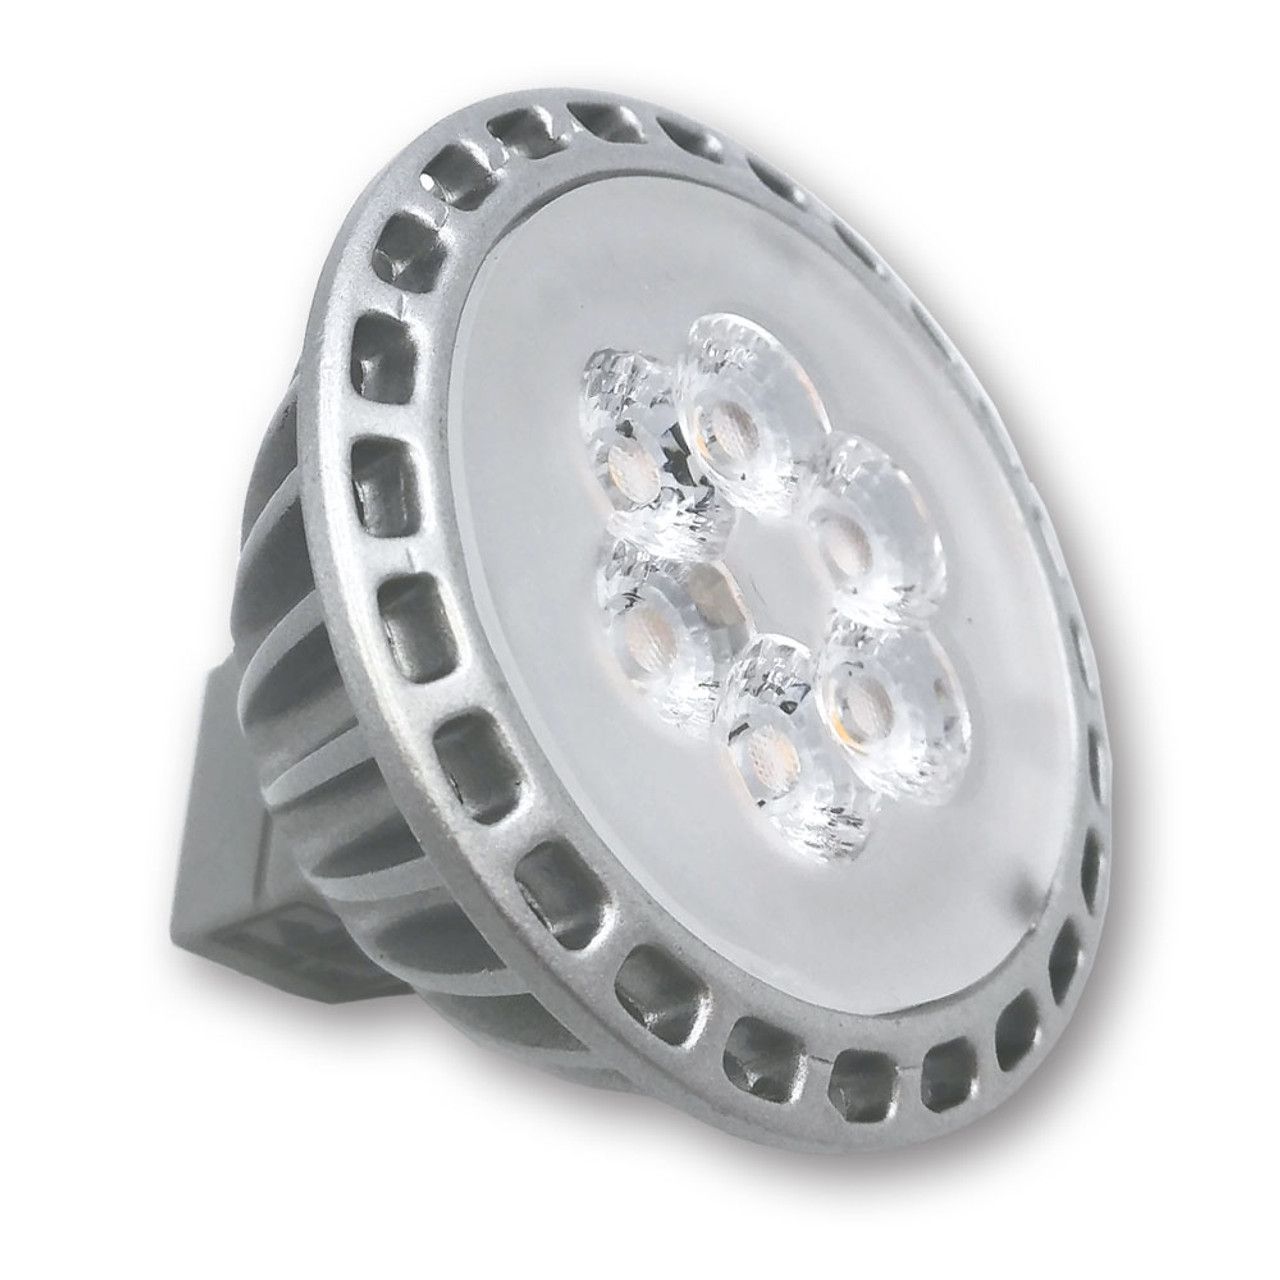 Mega LED - LED Replacement Bulb - MR16 Type, 5.5 Watt, 520 Lumens, 12V AC/DC, Beam Angle 30º, 3000K (30616-WW) - Apollo Lighting